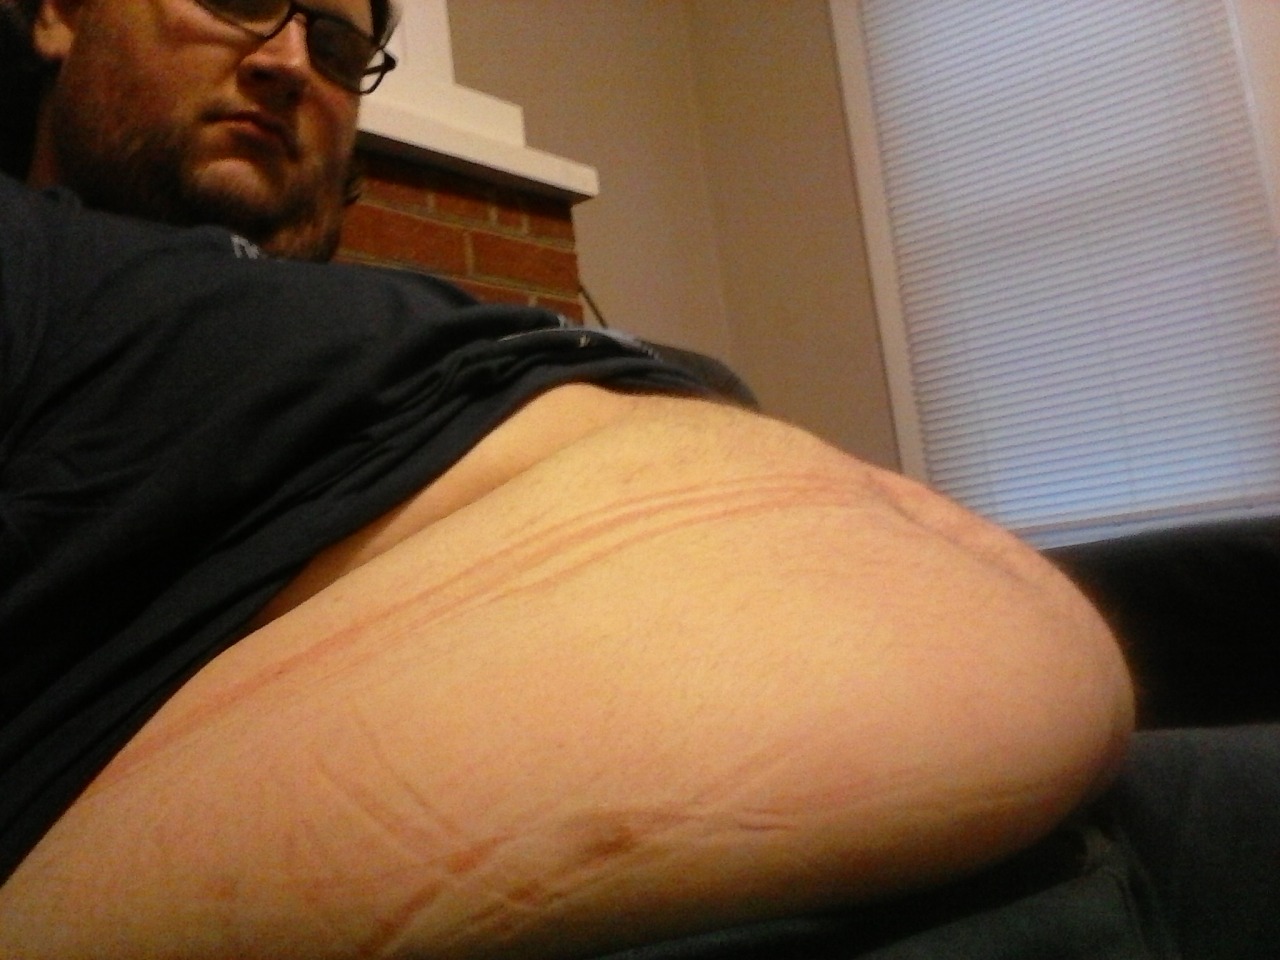 Belly pics per anon request. Enjoy :)